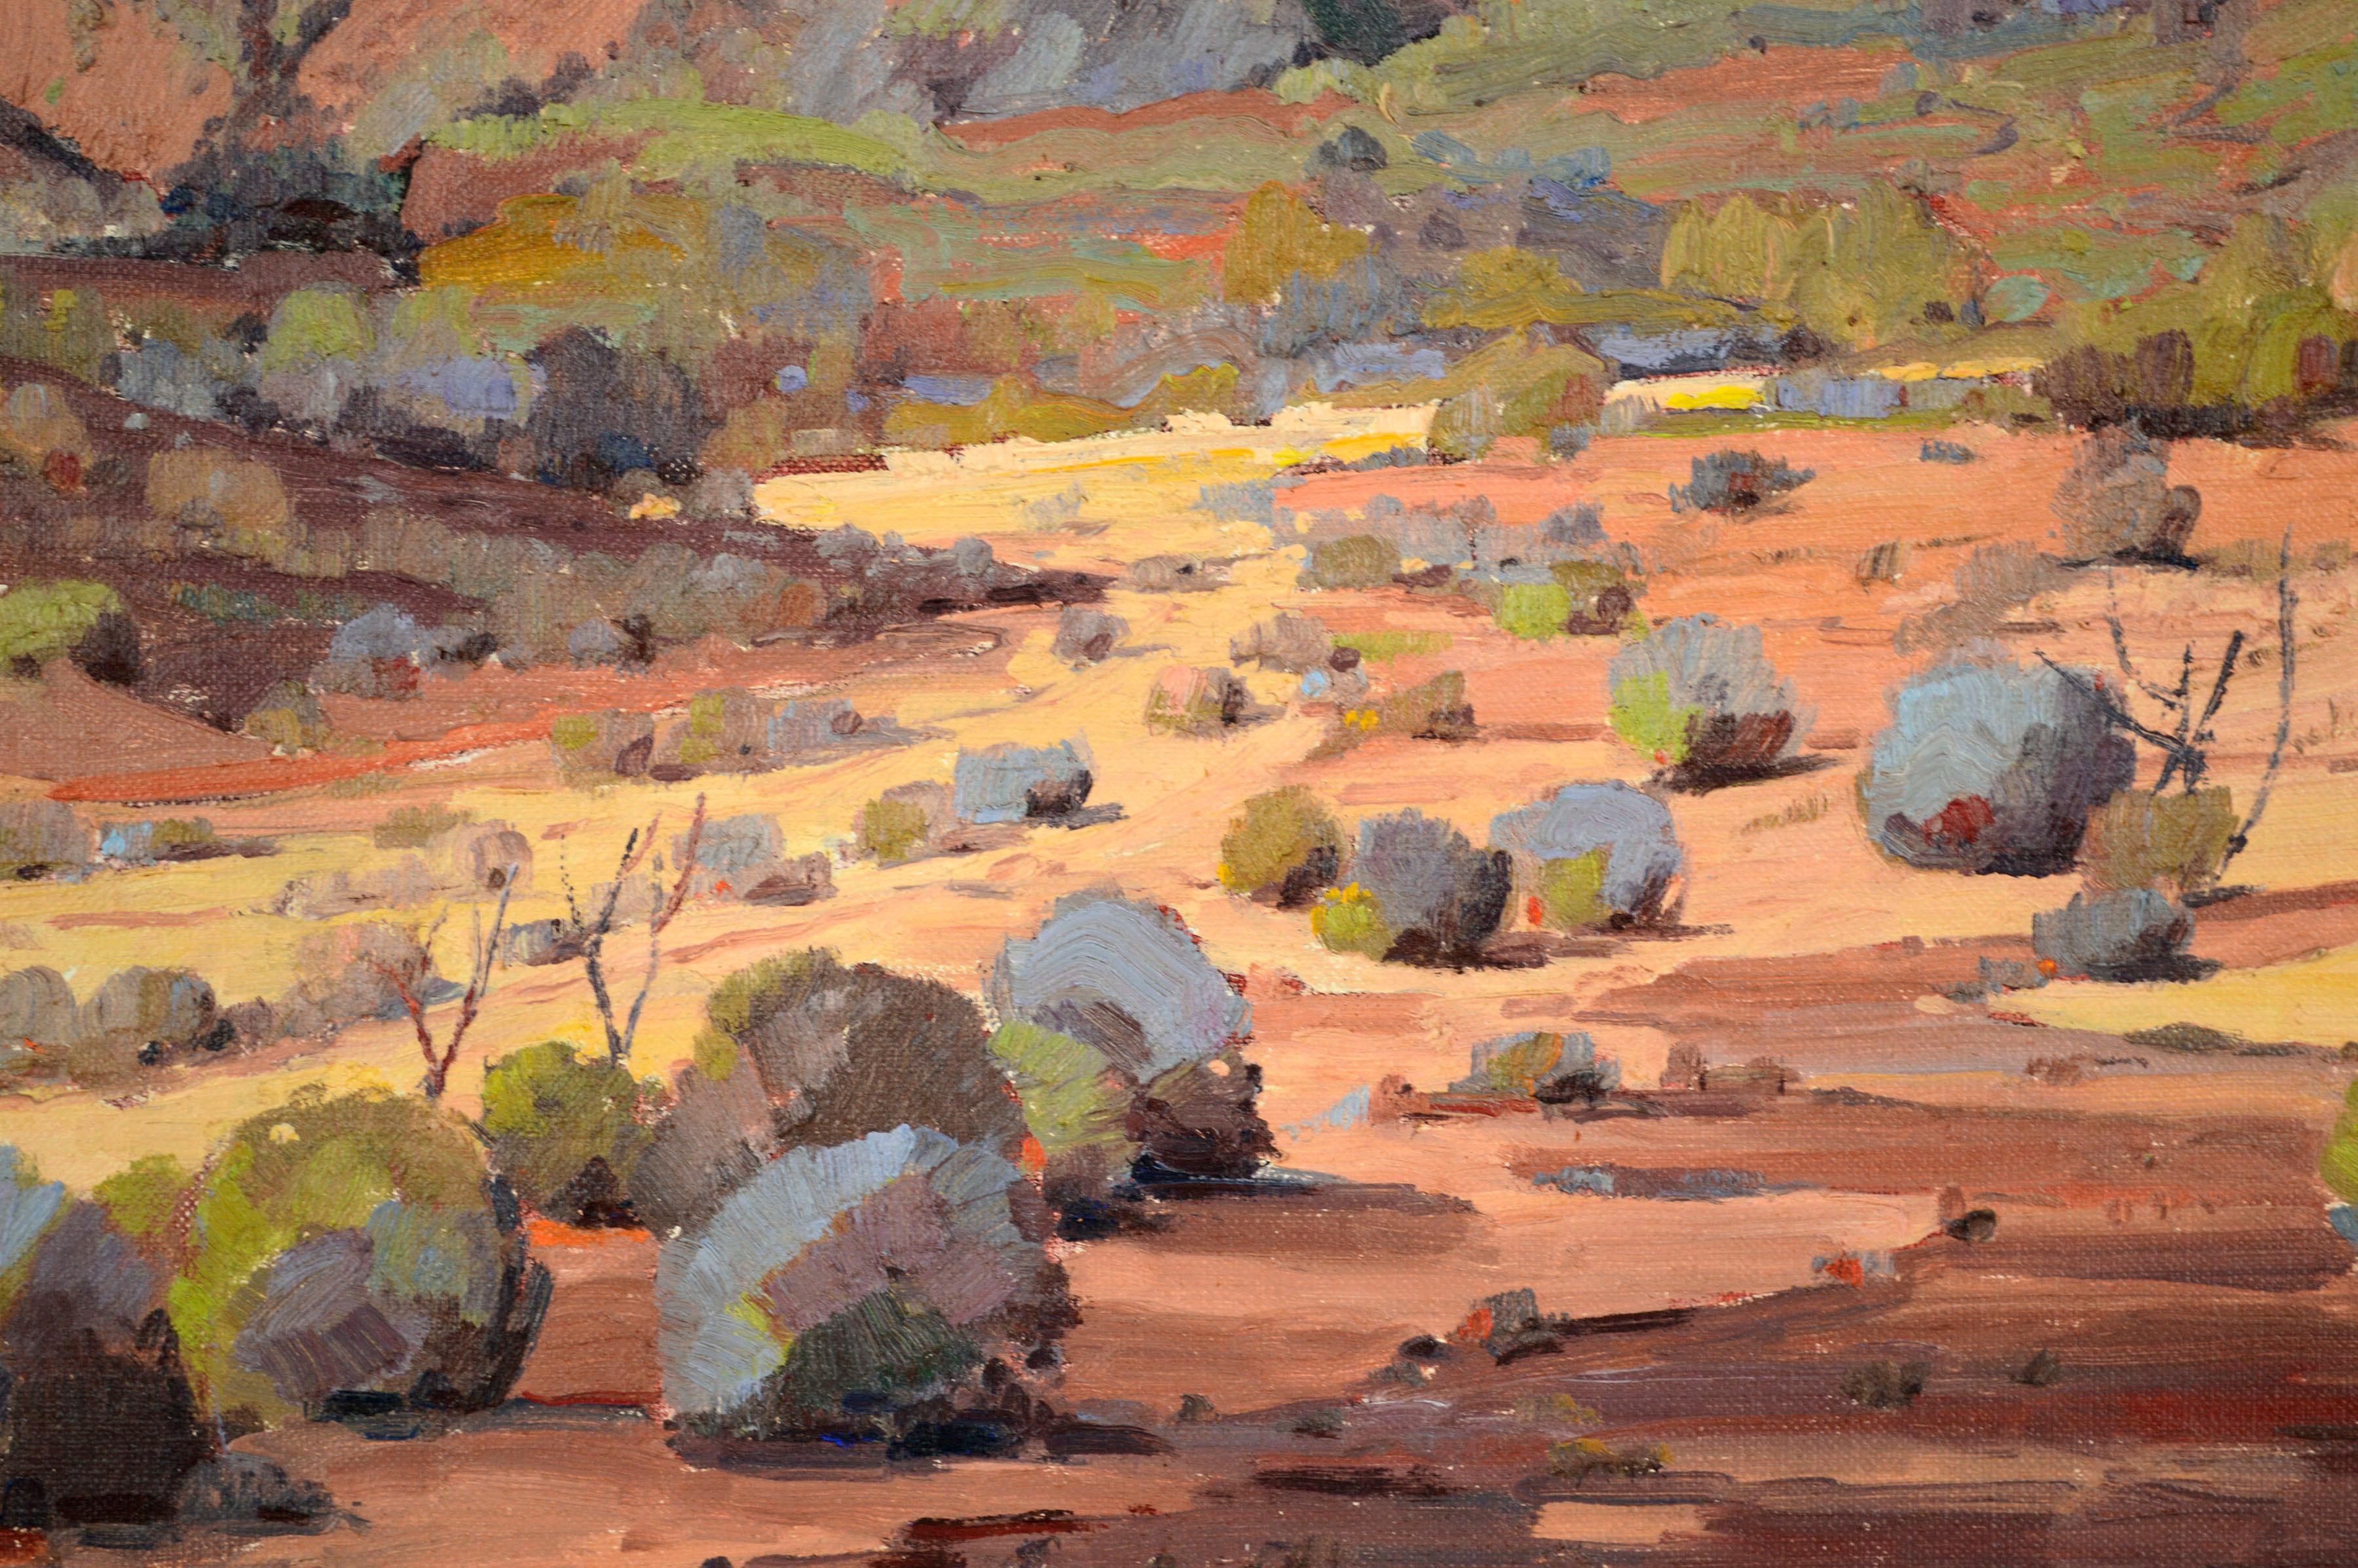 Picacho Peak, Arizona 1945 - Mid Century Southwest Desert Landscape by Dejoiner - Brown Landscape Painting by Luther Evans Dejoiner